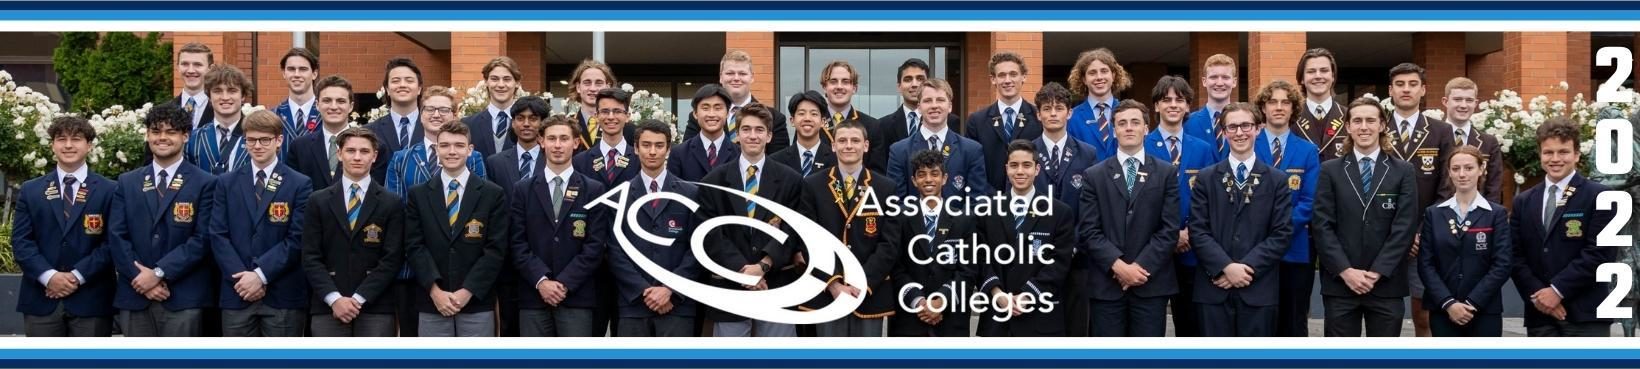 Associated Catholic Colleges